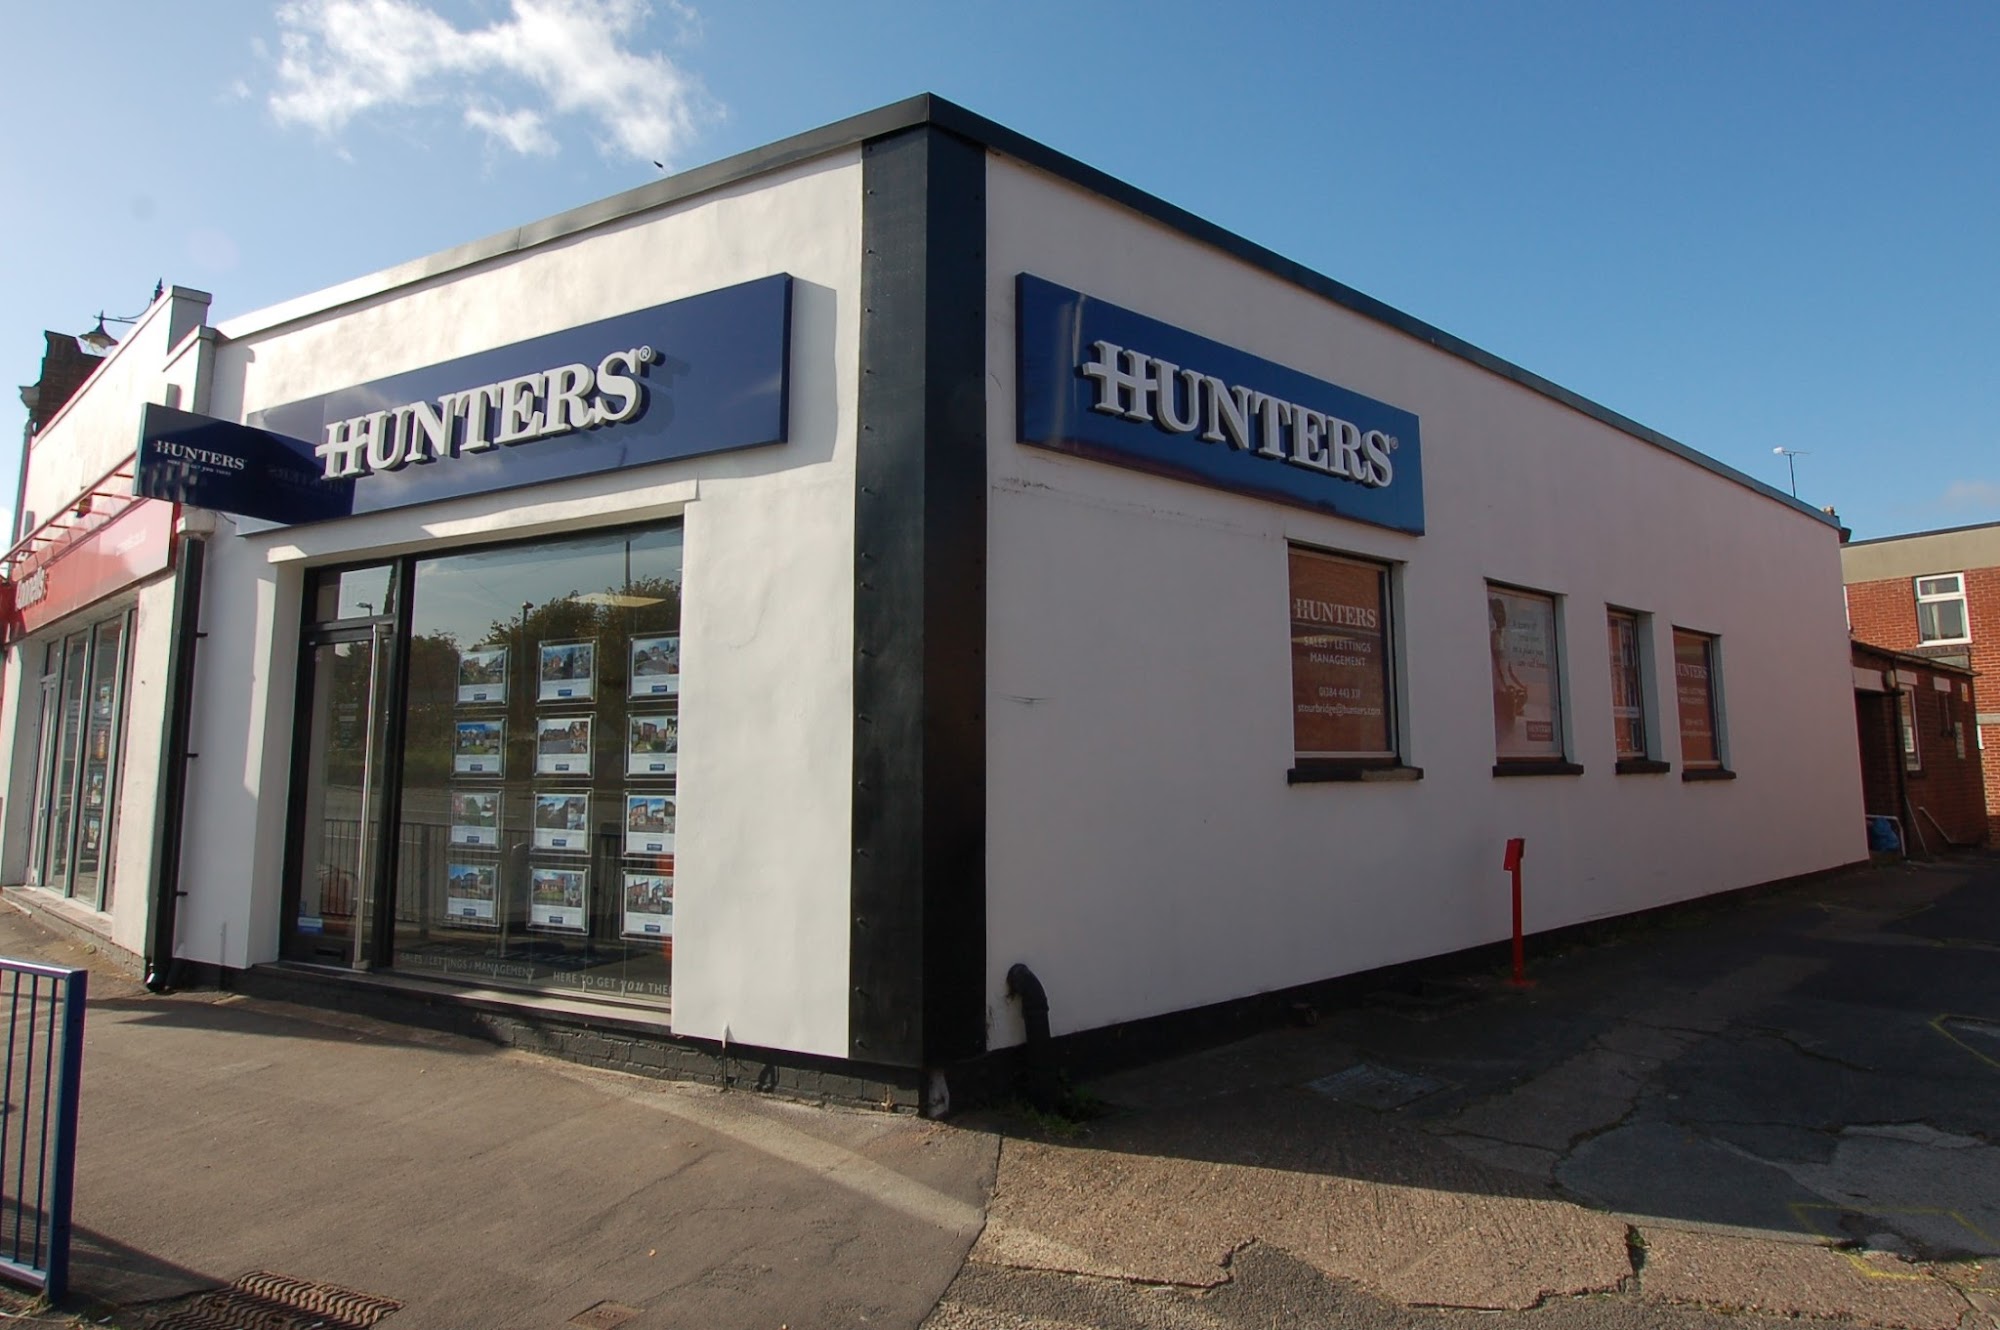 Hunters Estate & Letting Agents Stourbridge